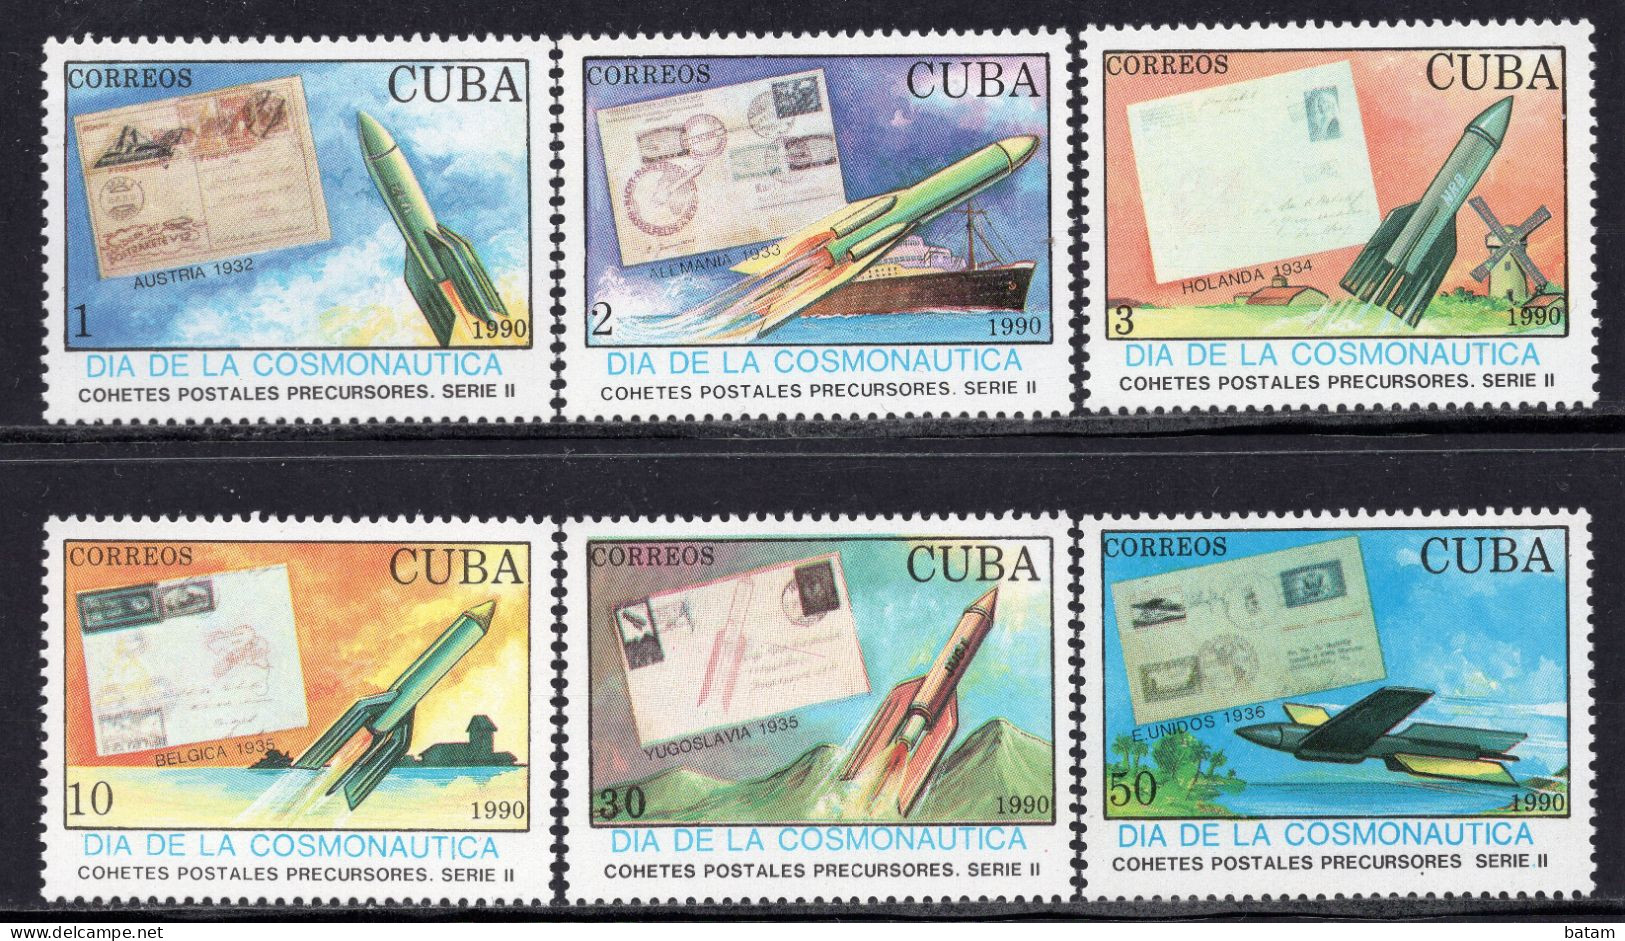 CUBA 1990 - Cosmonautics Day - Rocket Post - MNH Set - Nuovi